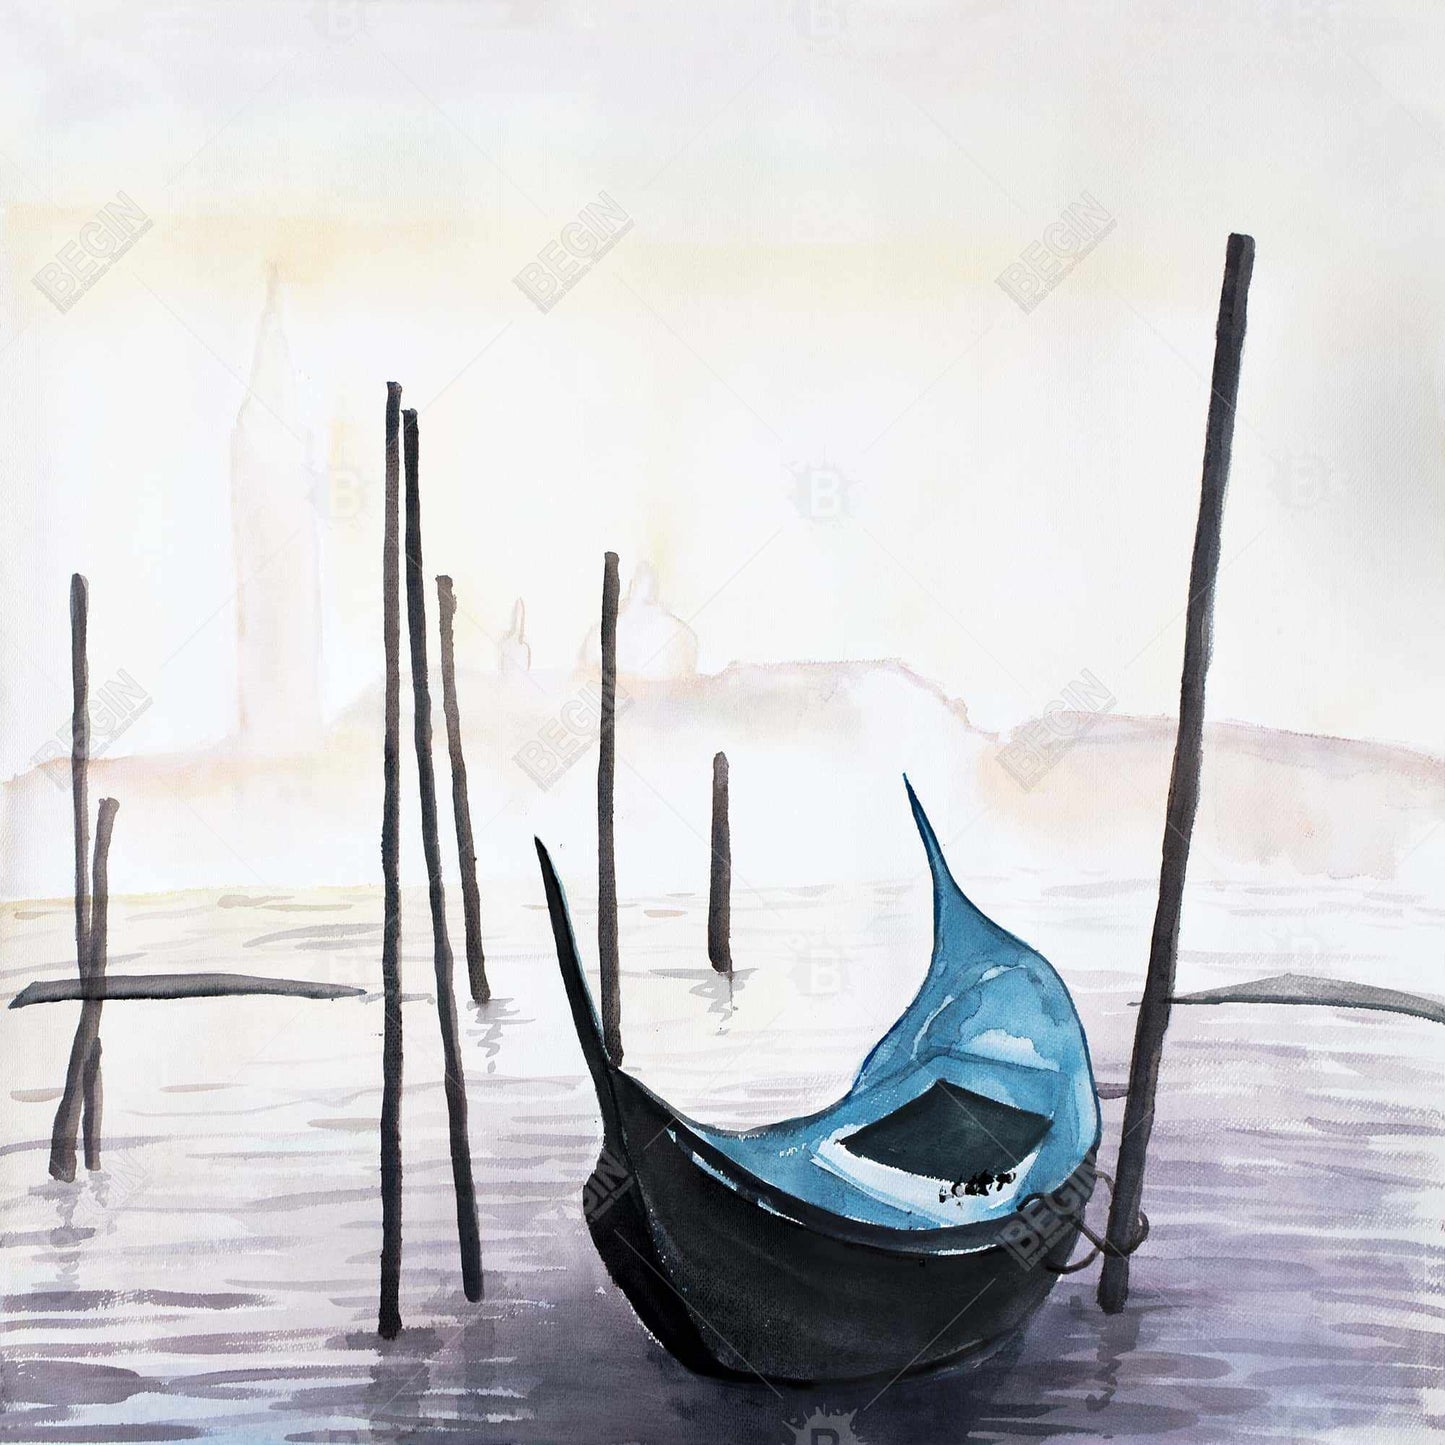 Gondola in venice - 32x32 Print on canvas